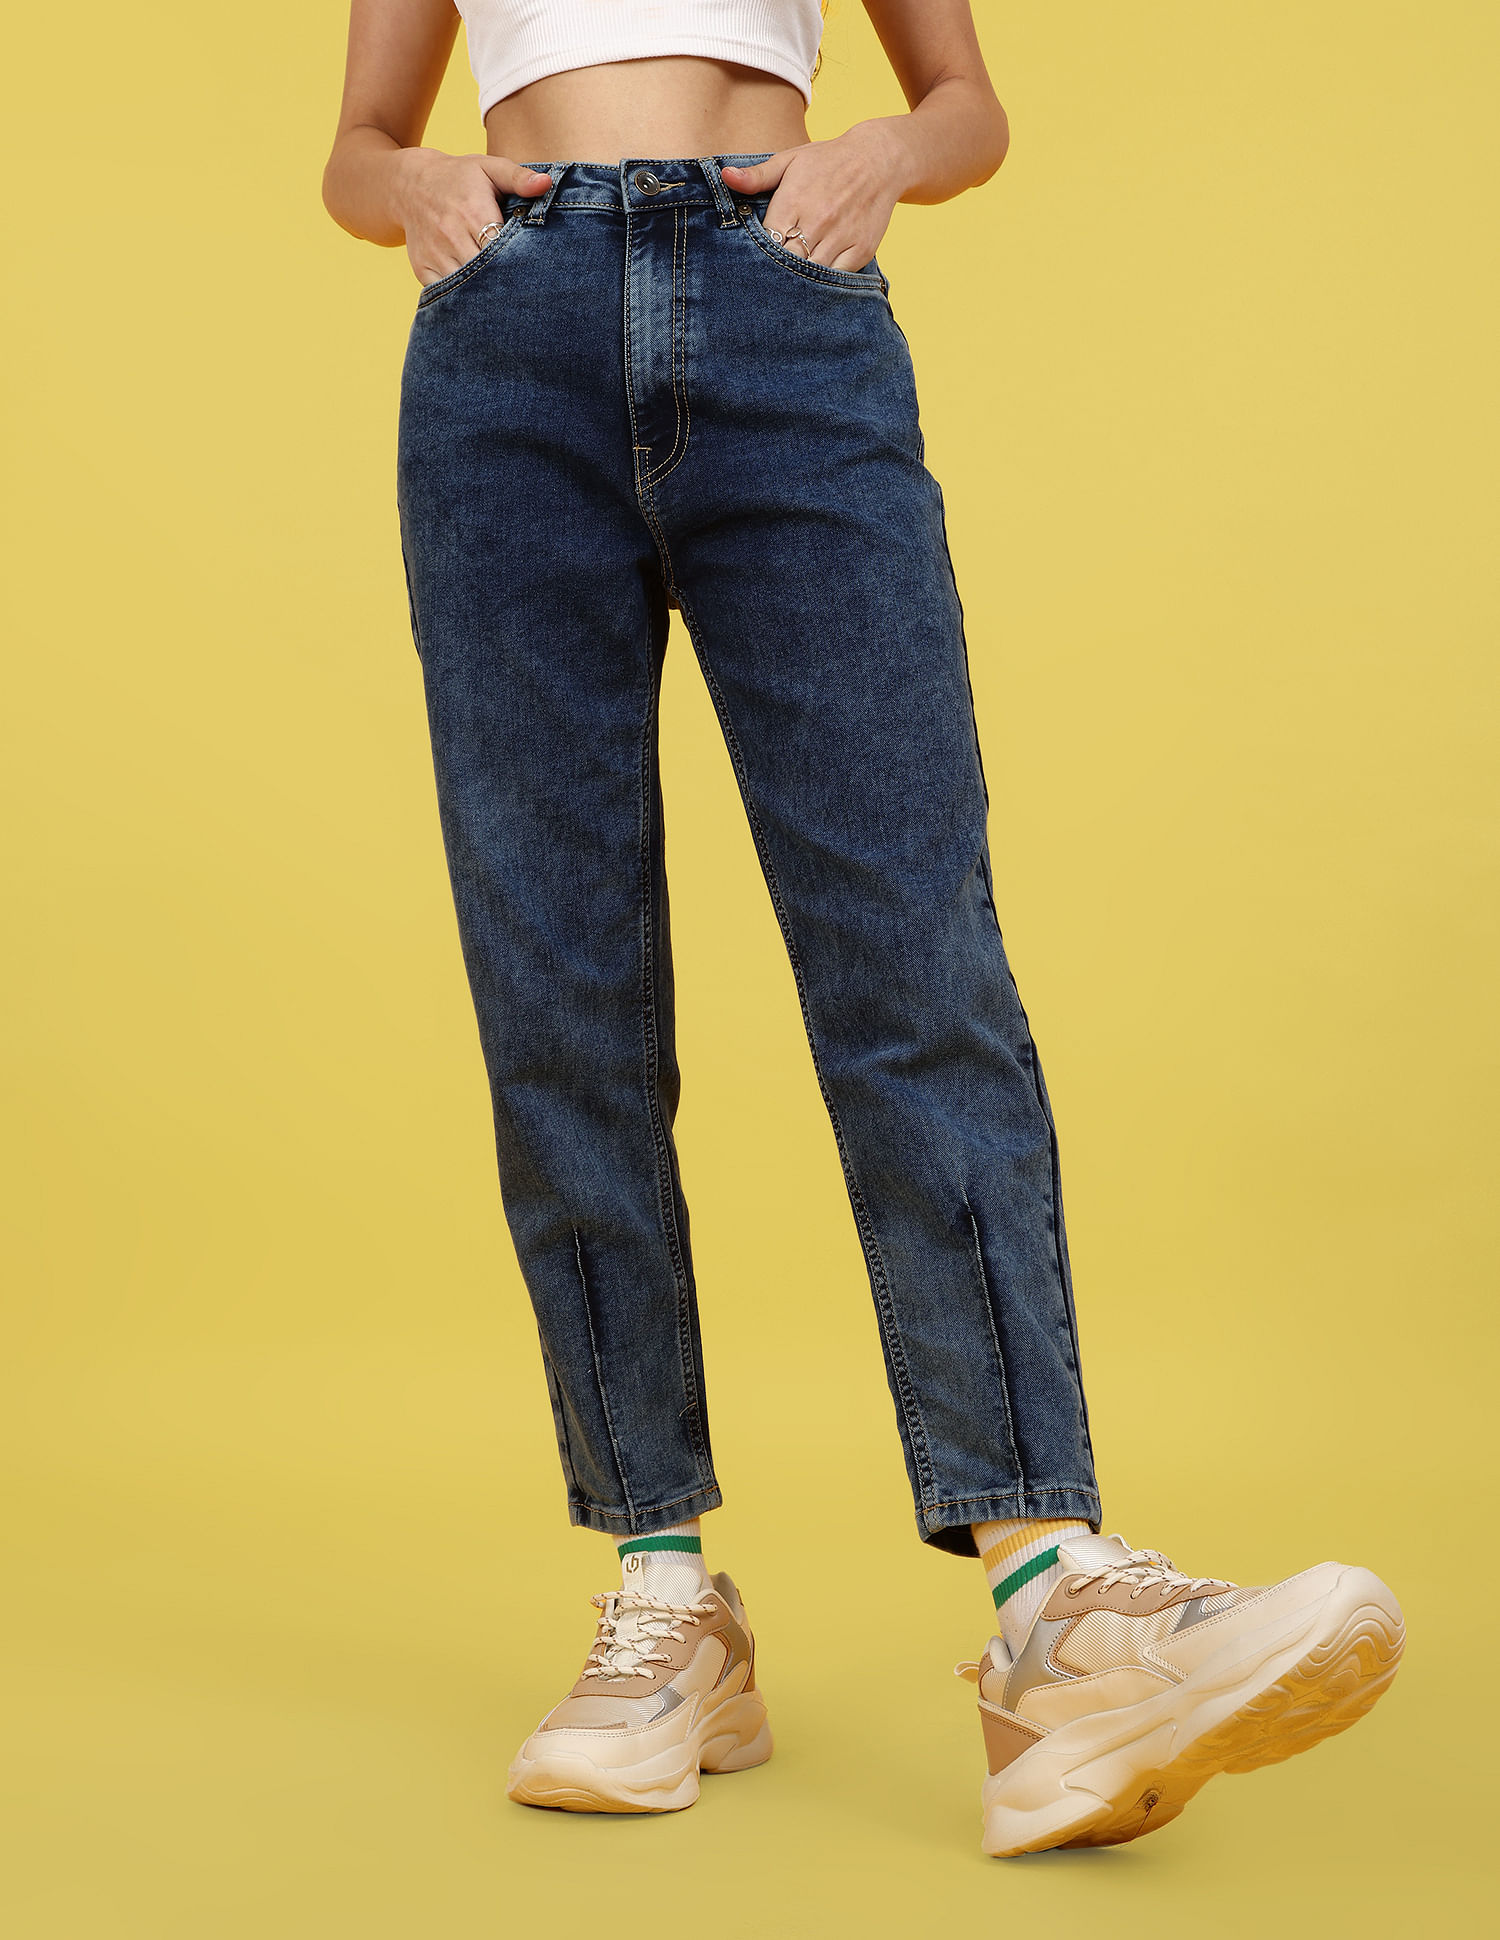 Zara Classic Mom Fit Jeans Size EU 32. RRP £27.99 | eBay-pokeht.vn